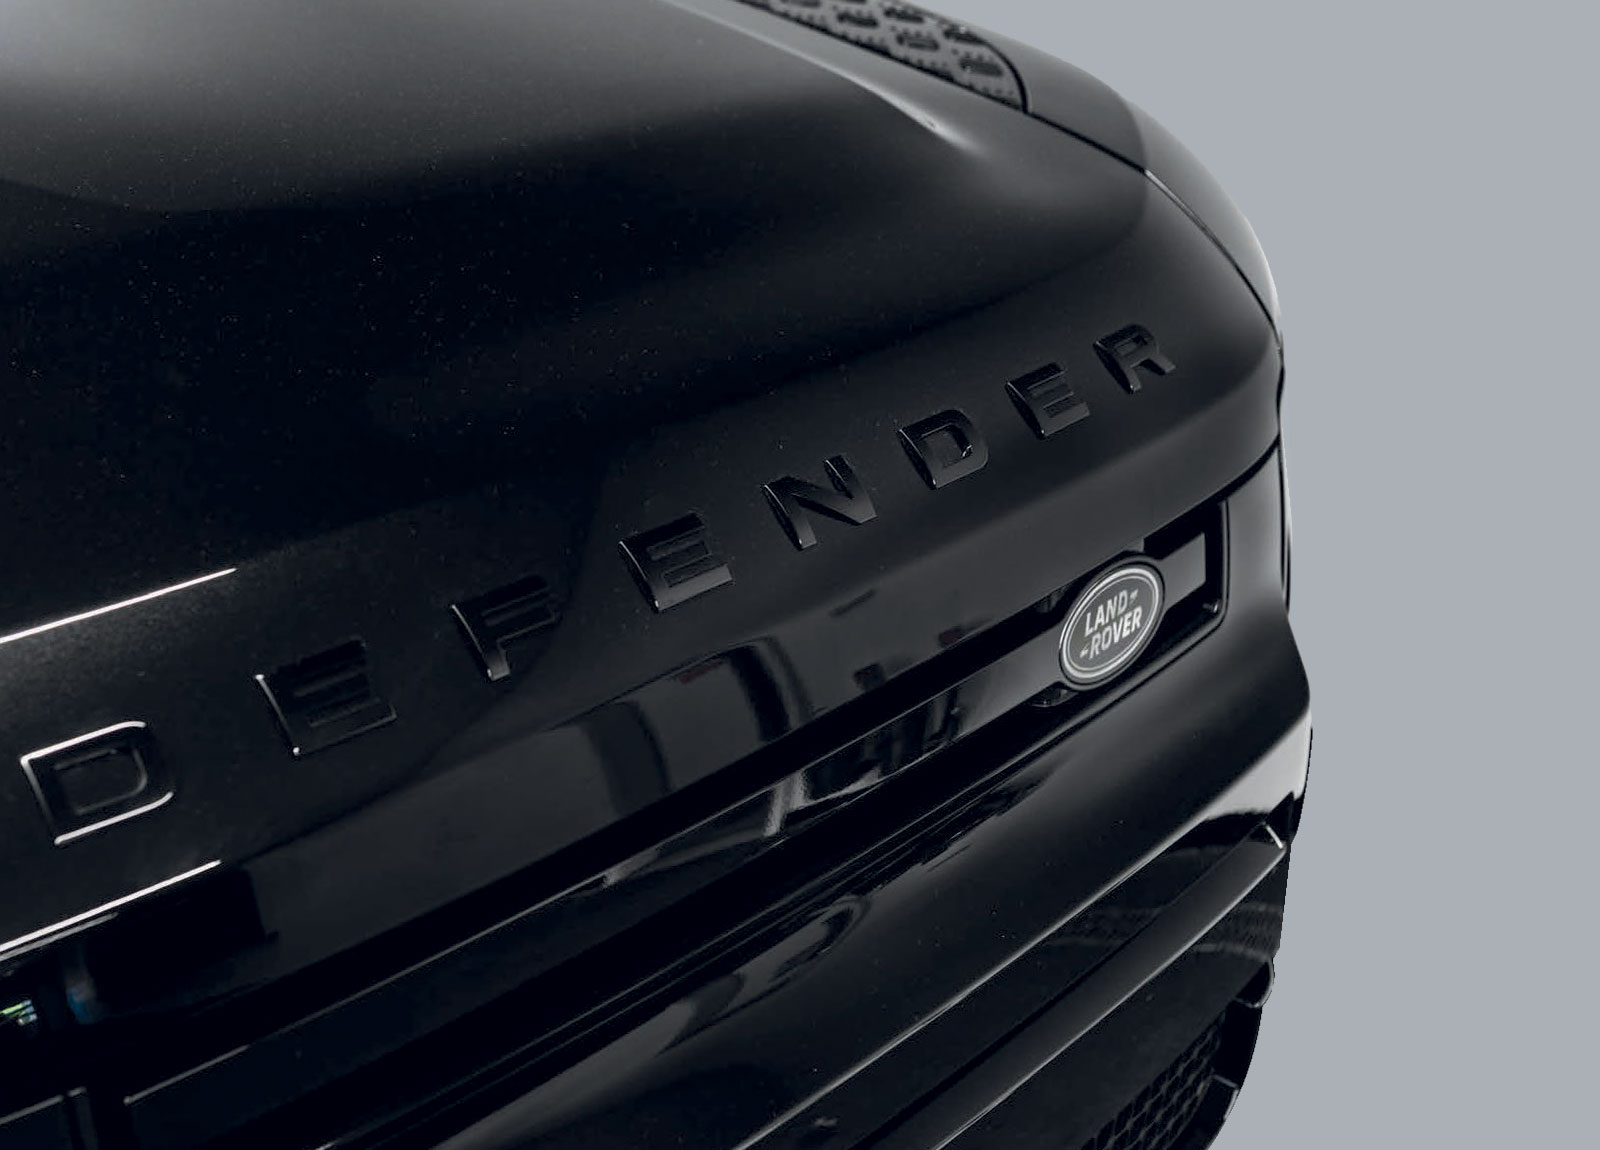 Land Rover Defender 007 edition exterior